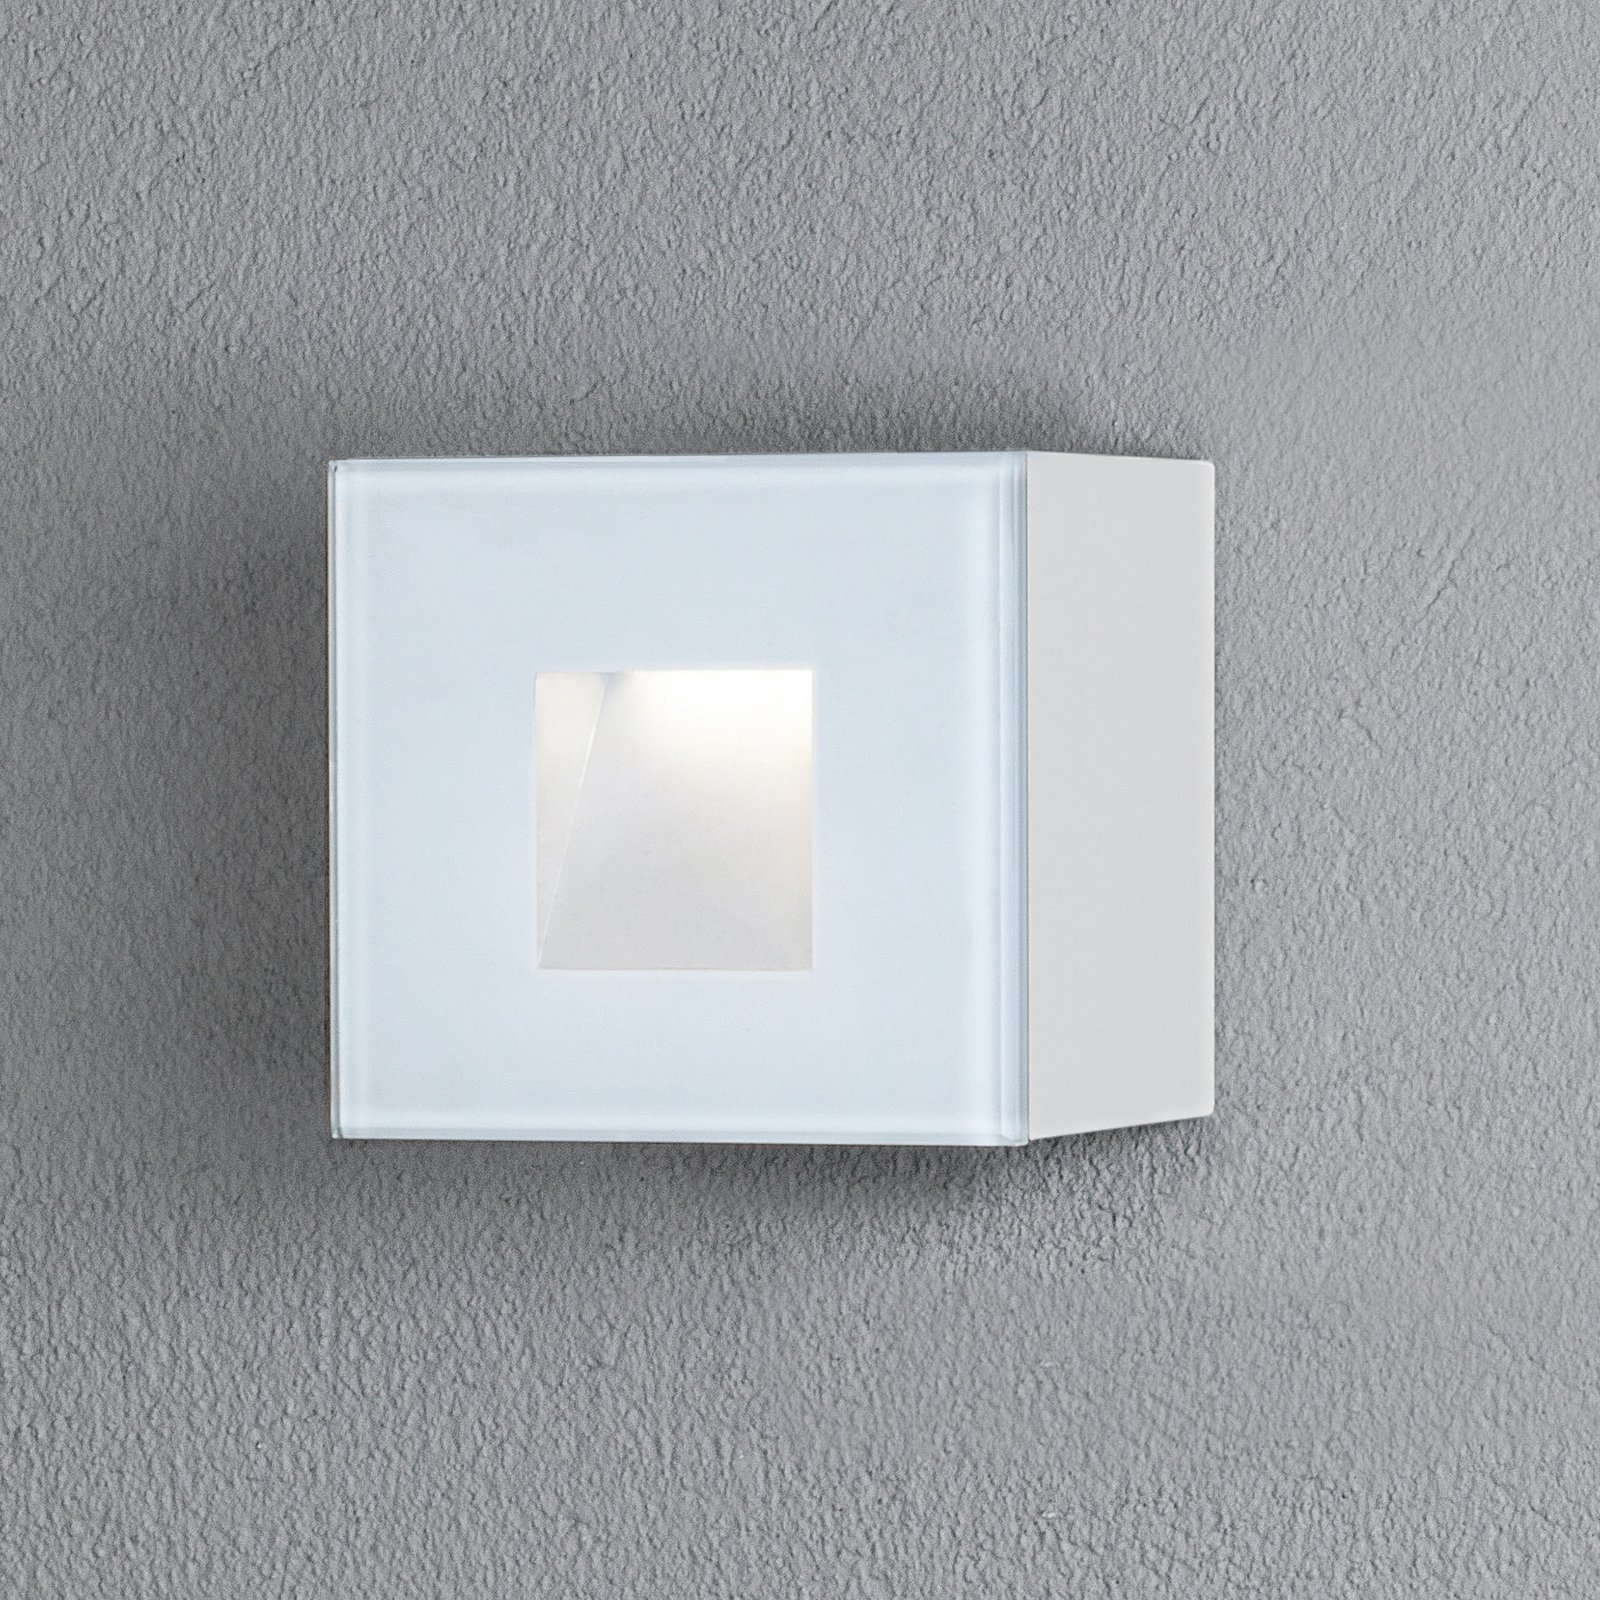 LED buiten wandlamp Chieri, 8 x 8 cm, wit